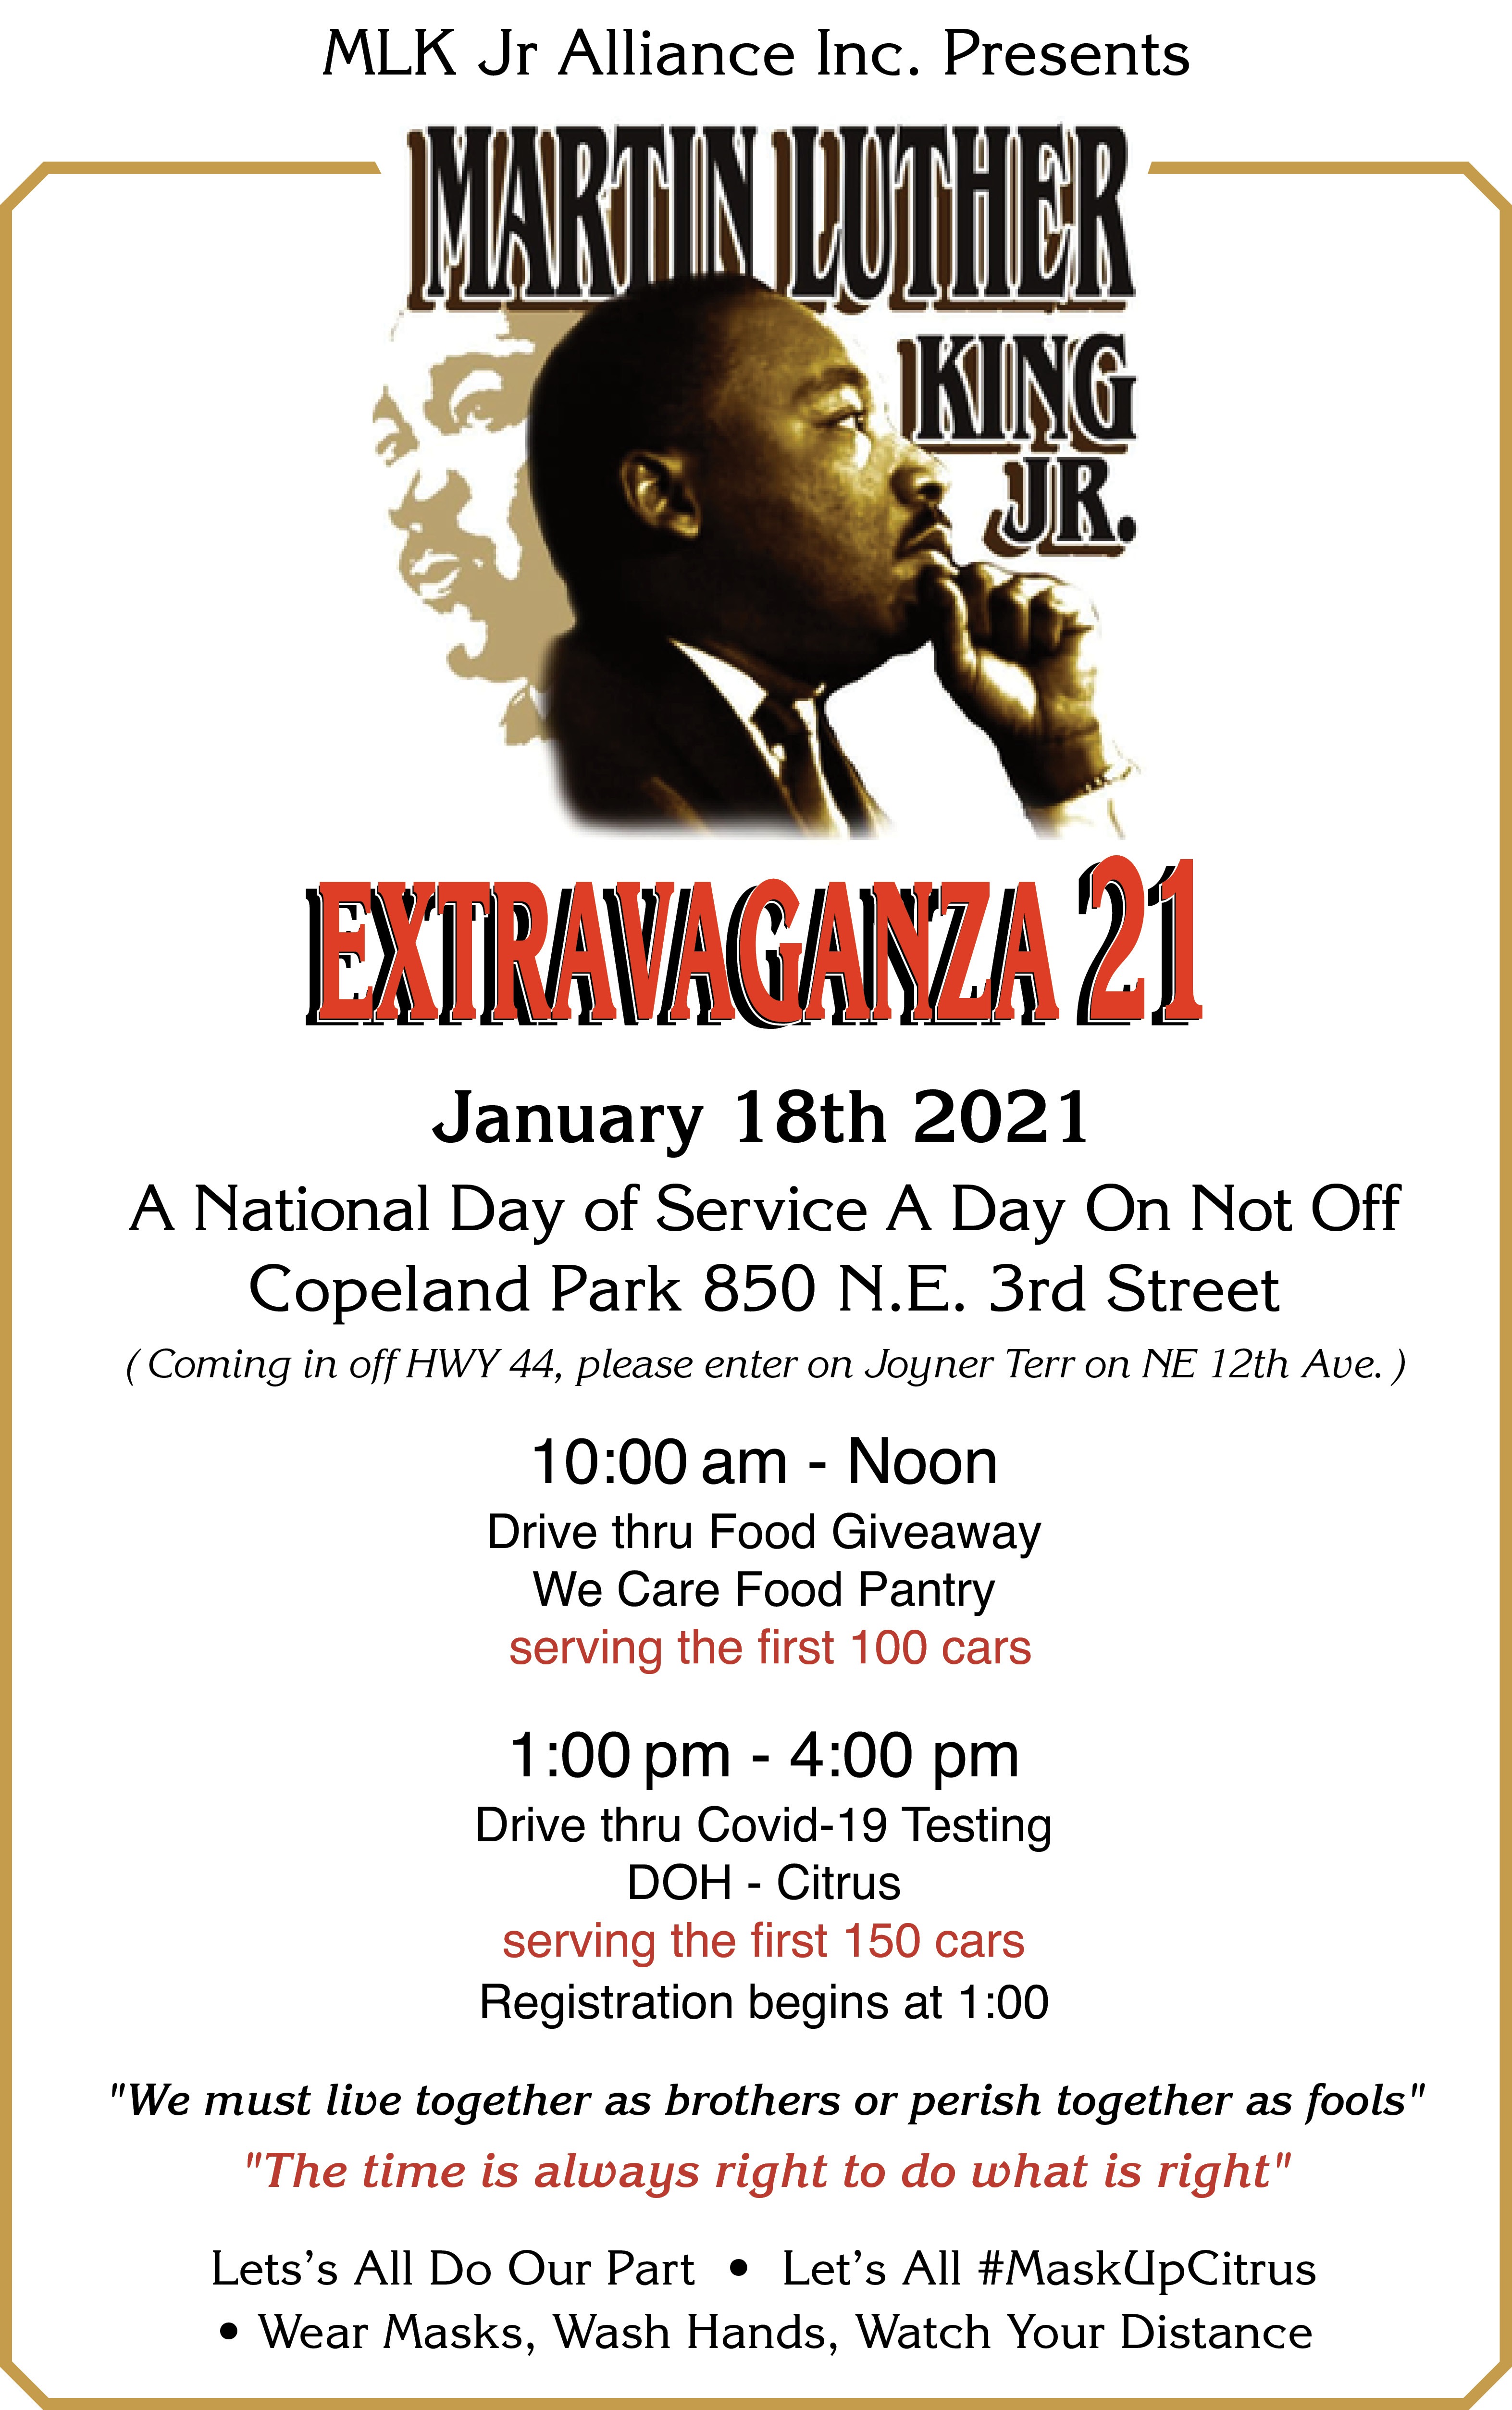 Info on MLK Jr Day Extravaganza 21 Event